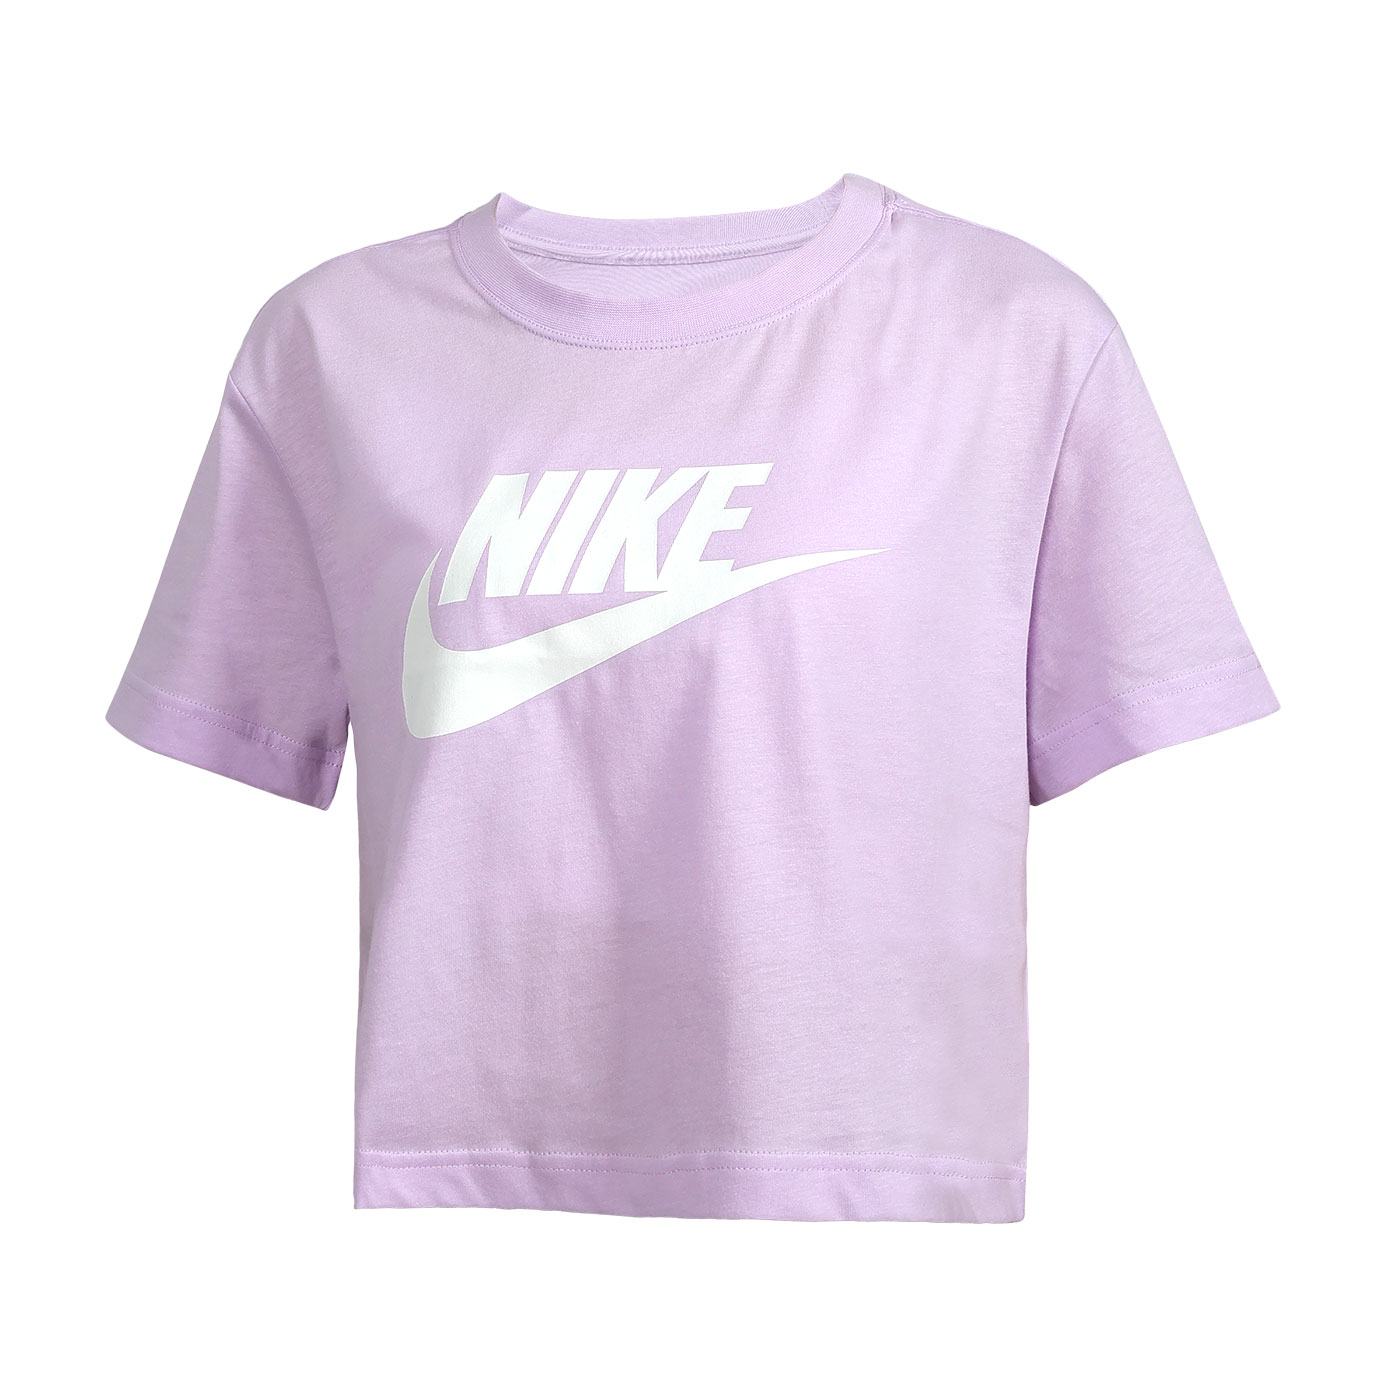 NIKE 女款短款T恤  BV6176-511 - 馬卡龍紫白